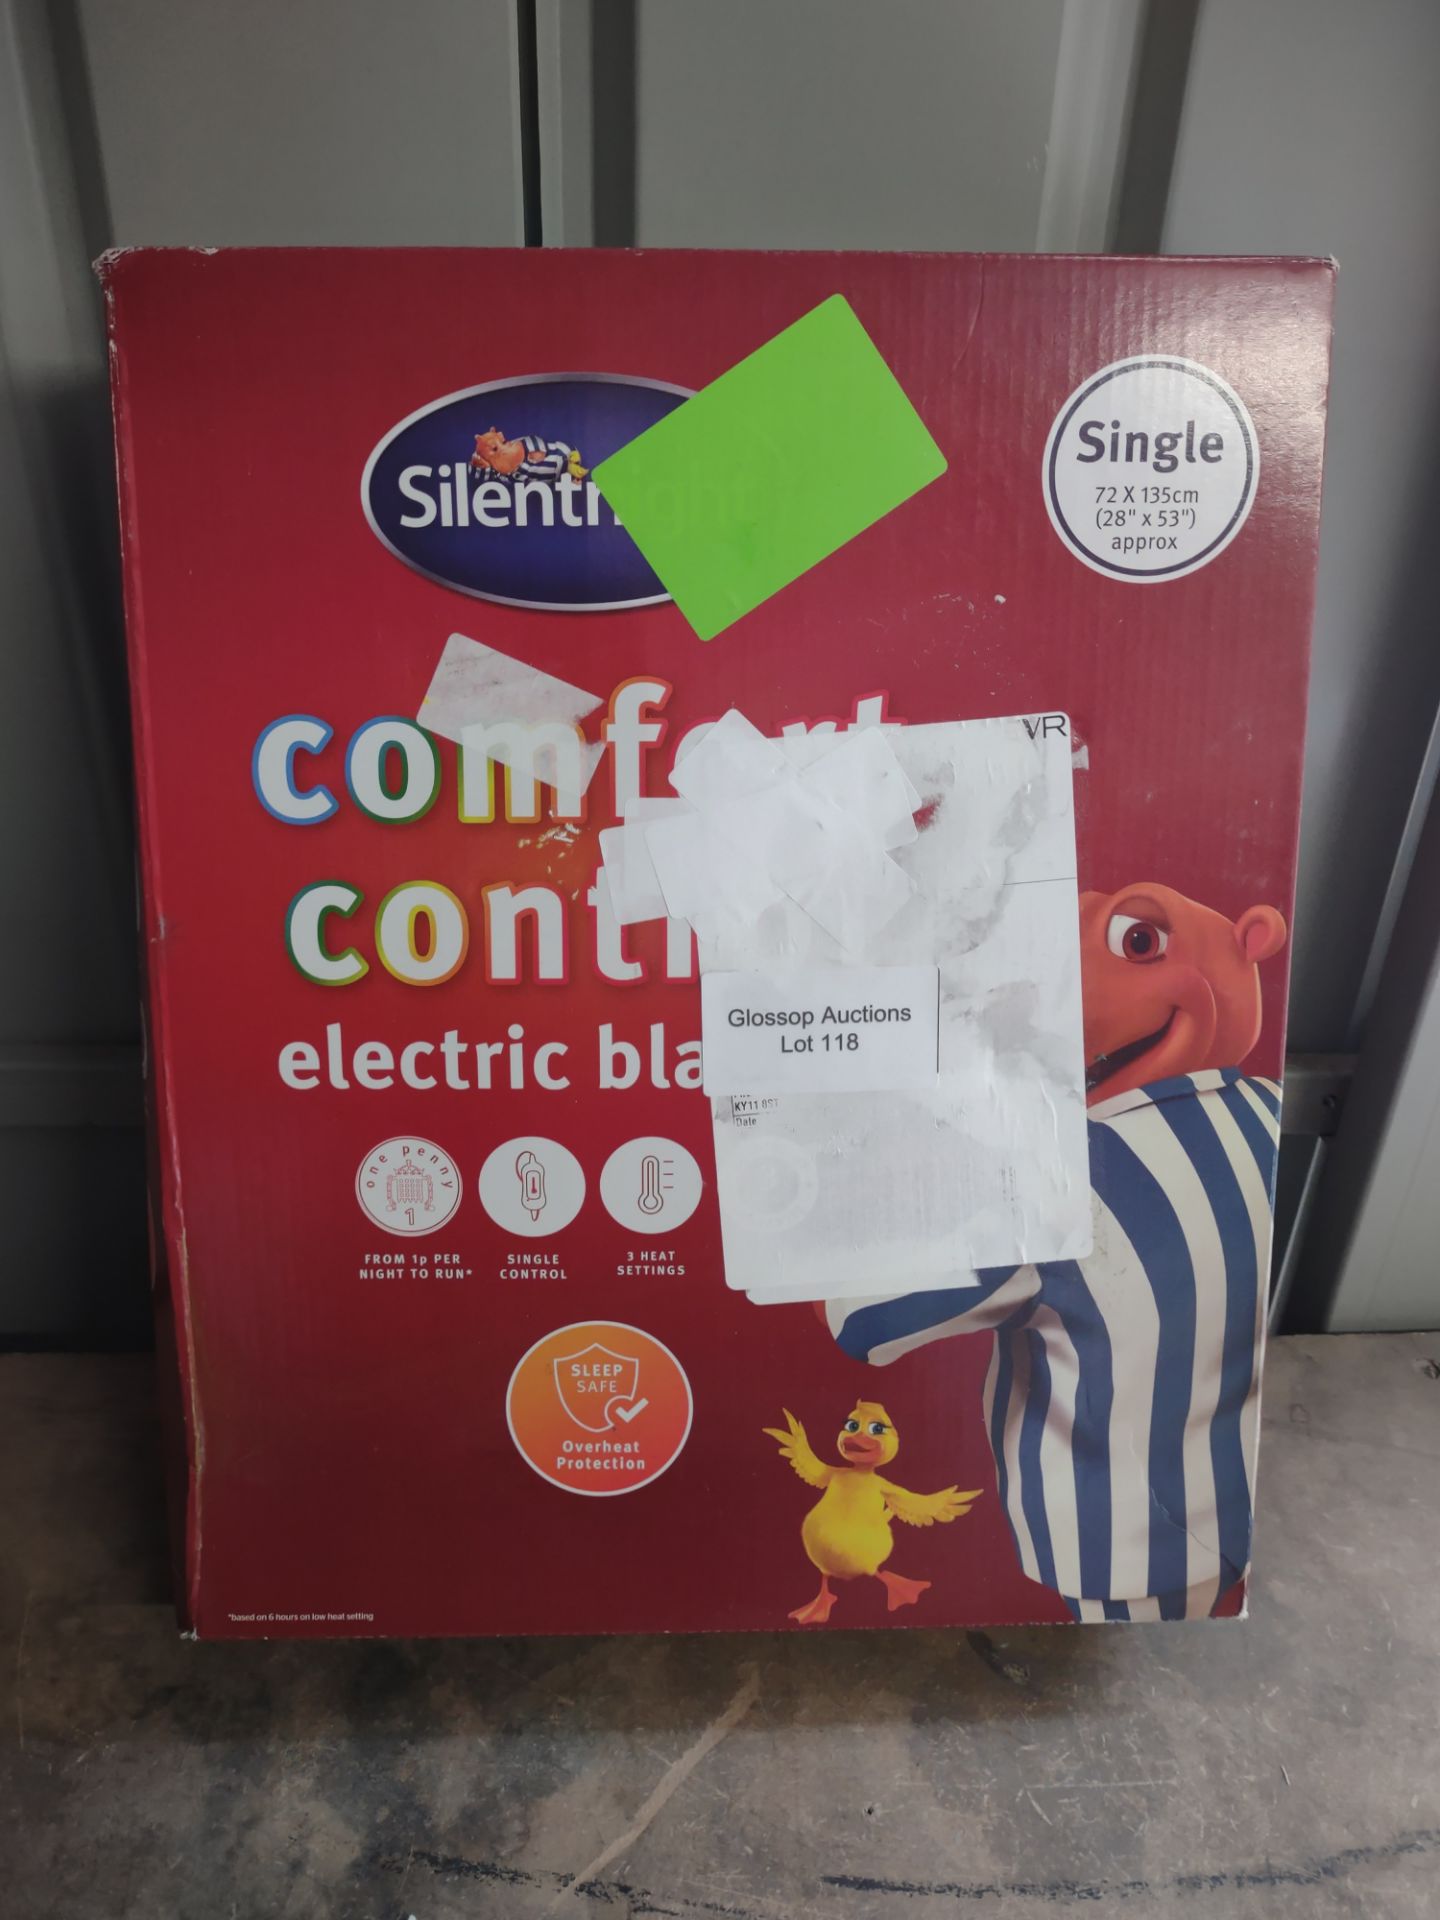 Silentnight Comfort Control Electric Blanket - Single. RRP £25.00 GRADE U - Image 2 of 2